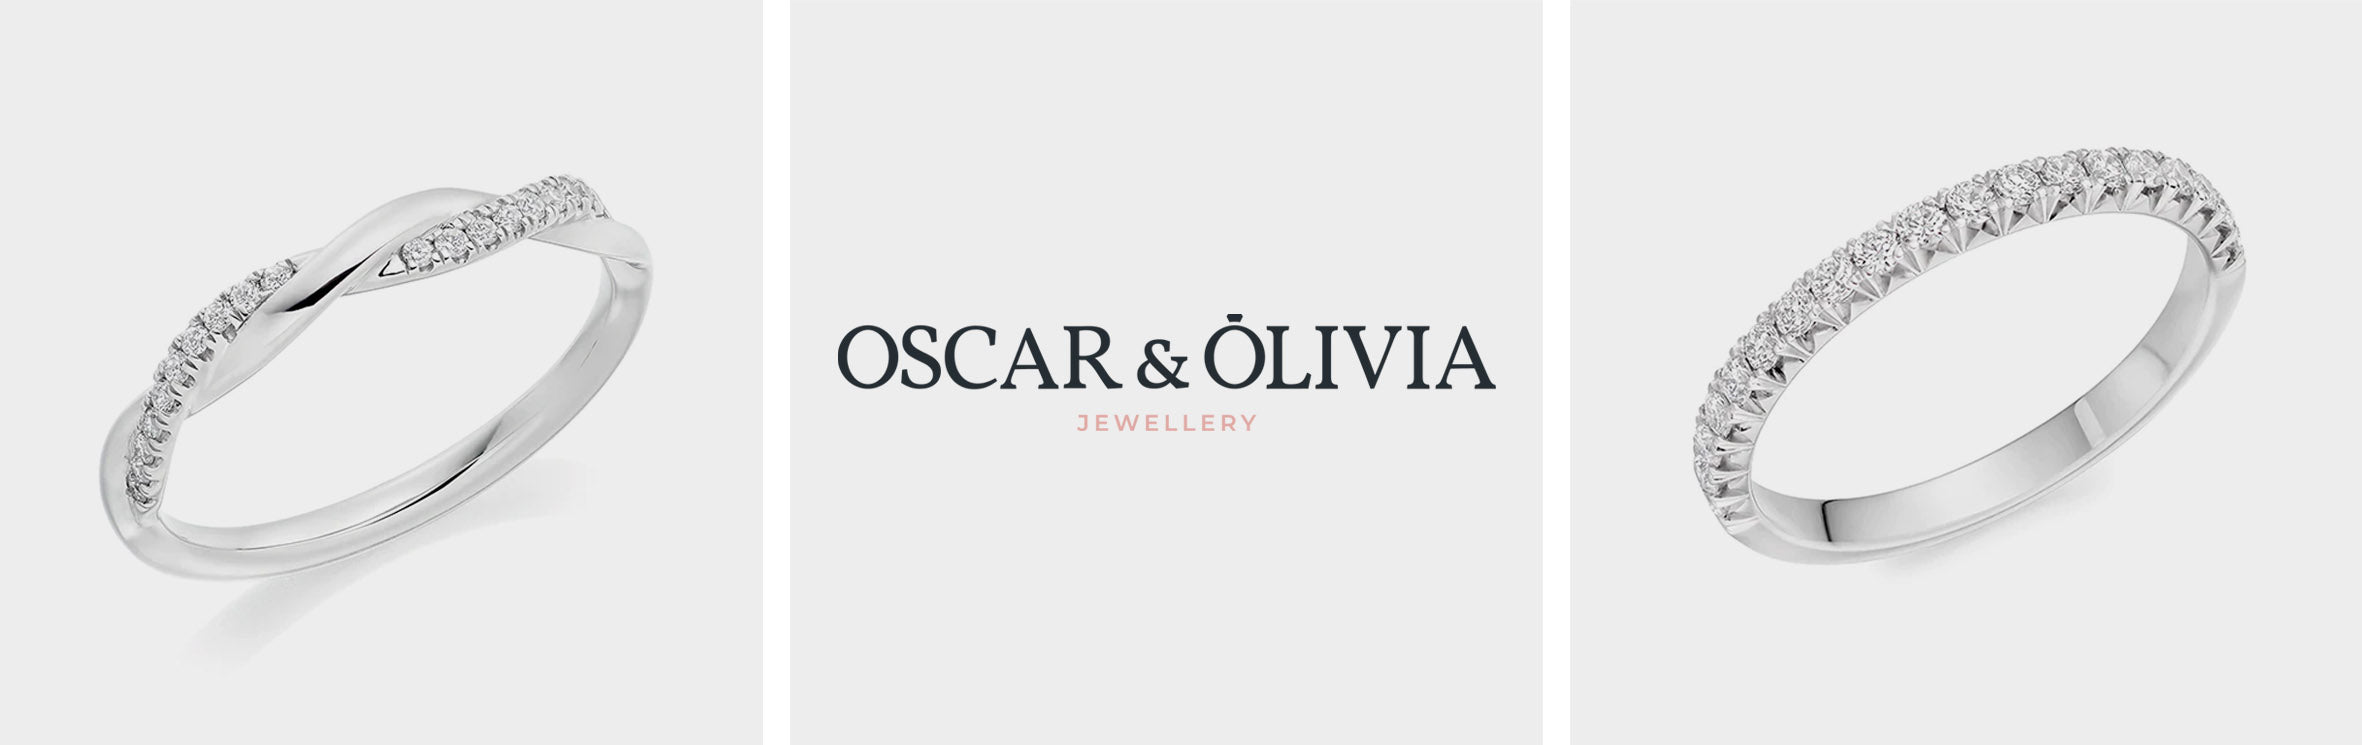 Diamond wedding rings at Oscar & Olivia Jewellery